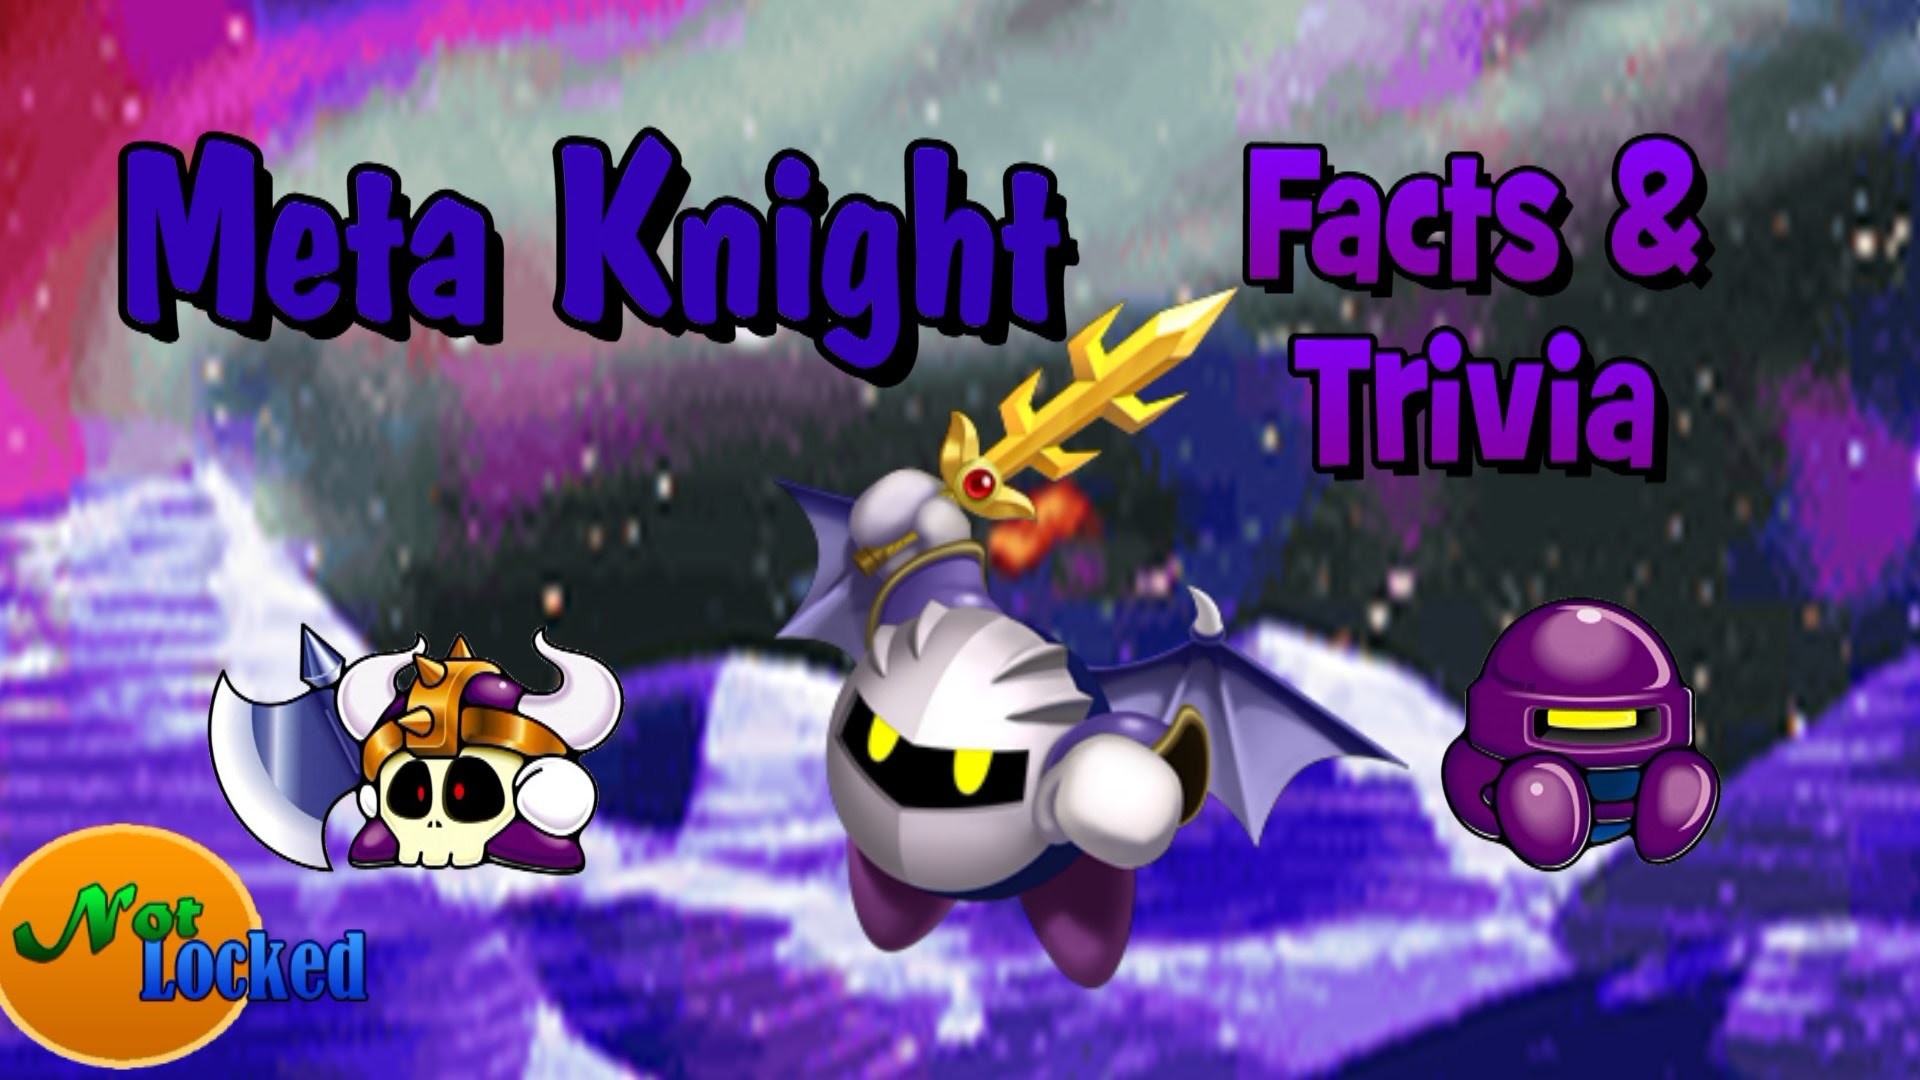 1920x1080 Nintendo Heroes - Meta Knight (Facts & Trivia)